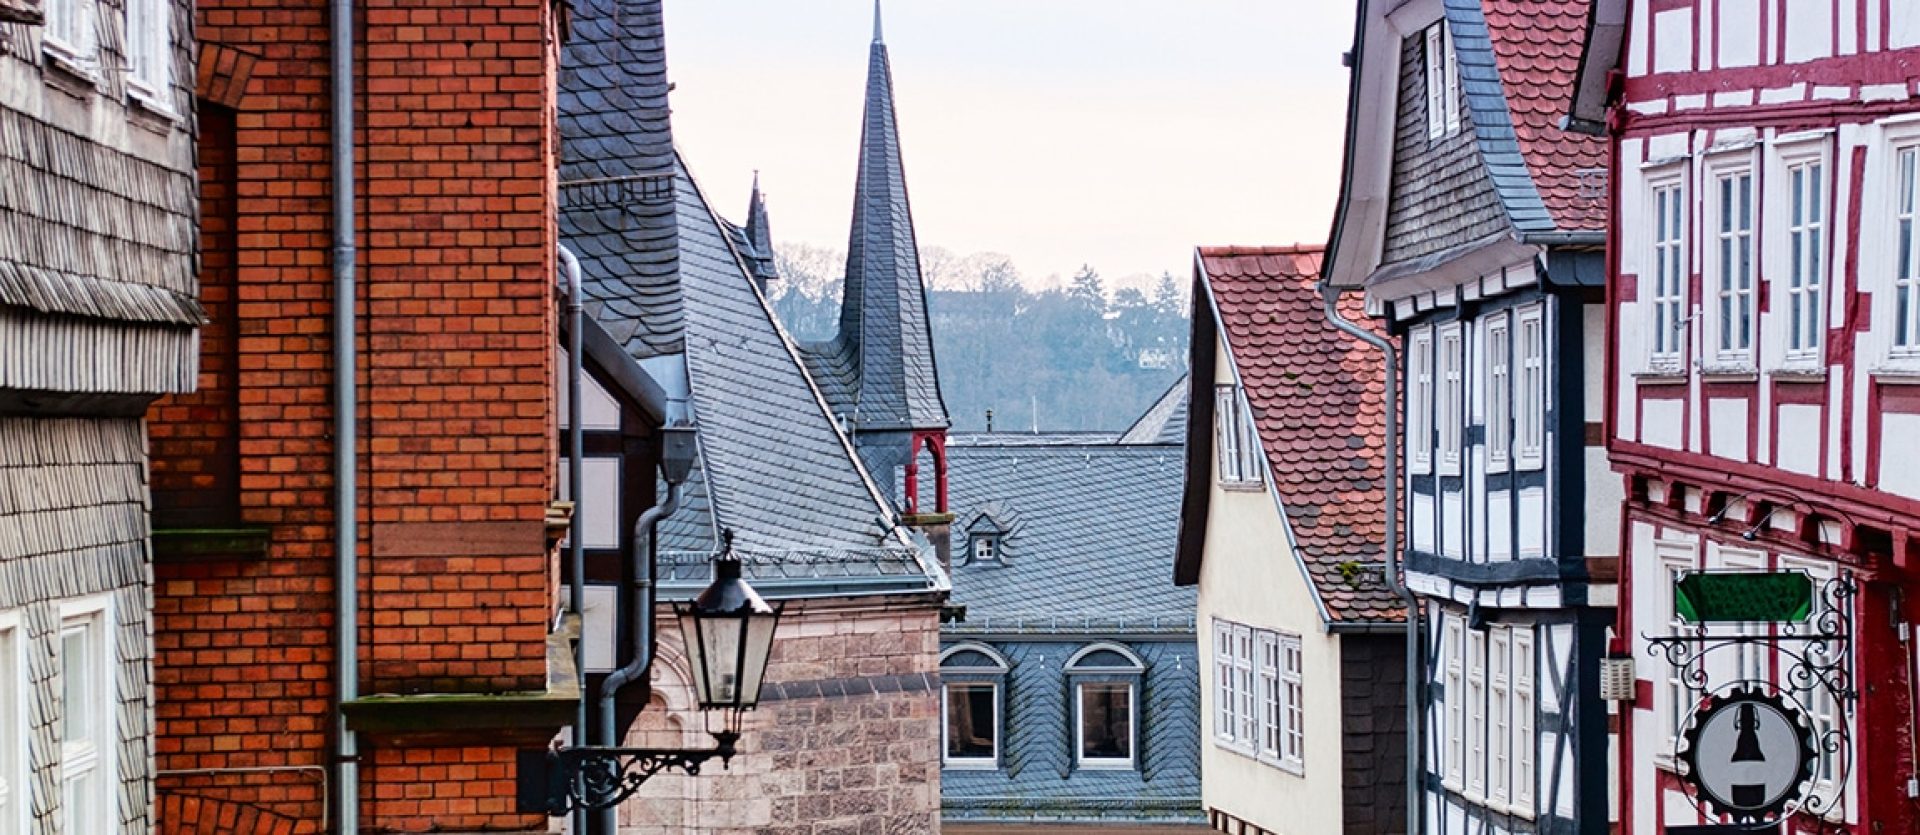 Photo of Marburg, Germany's old city